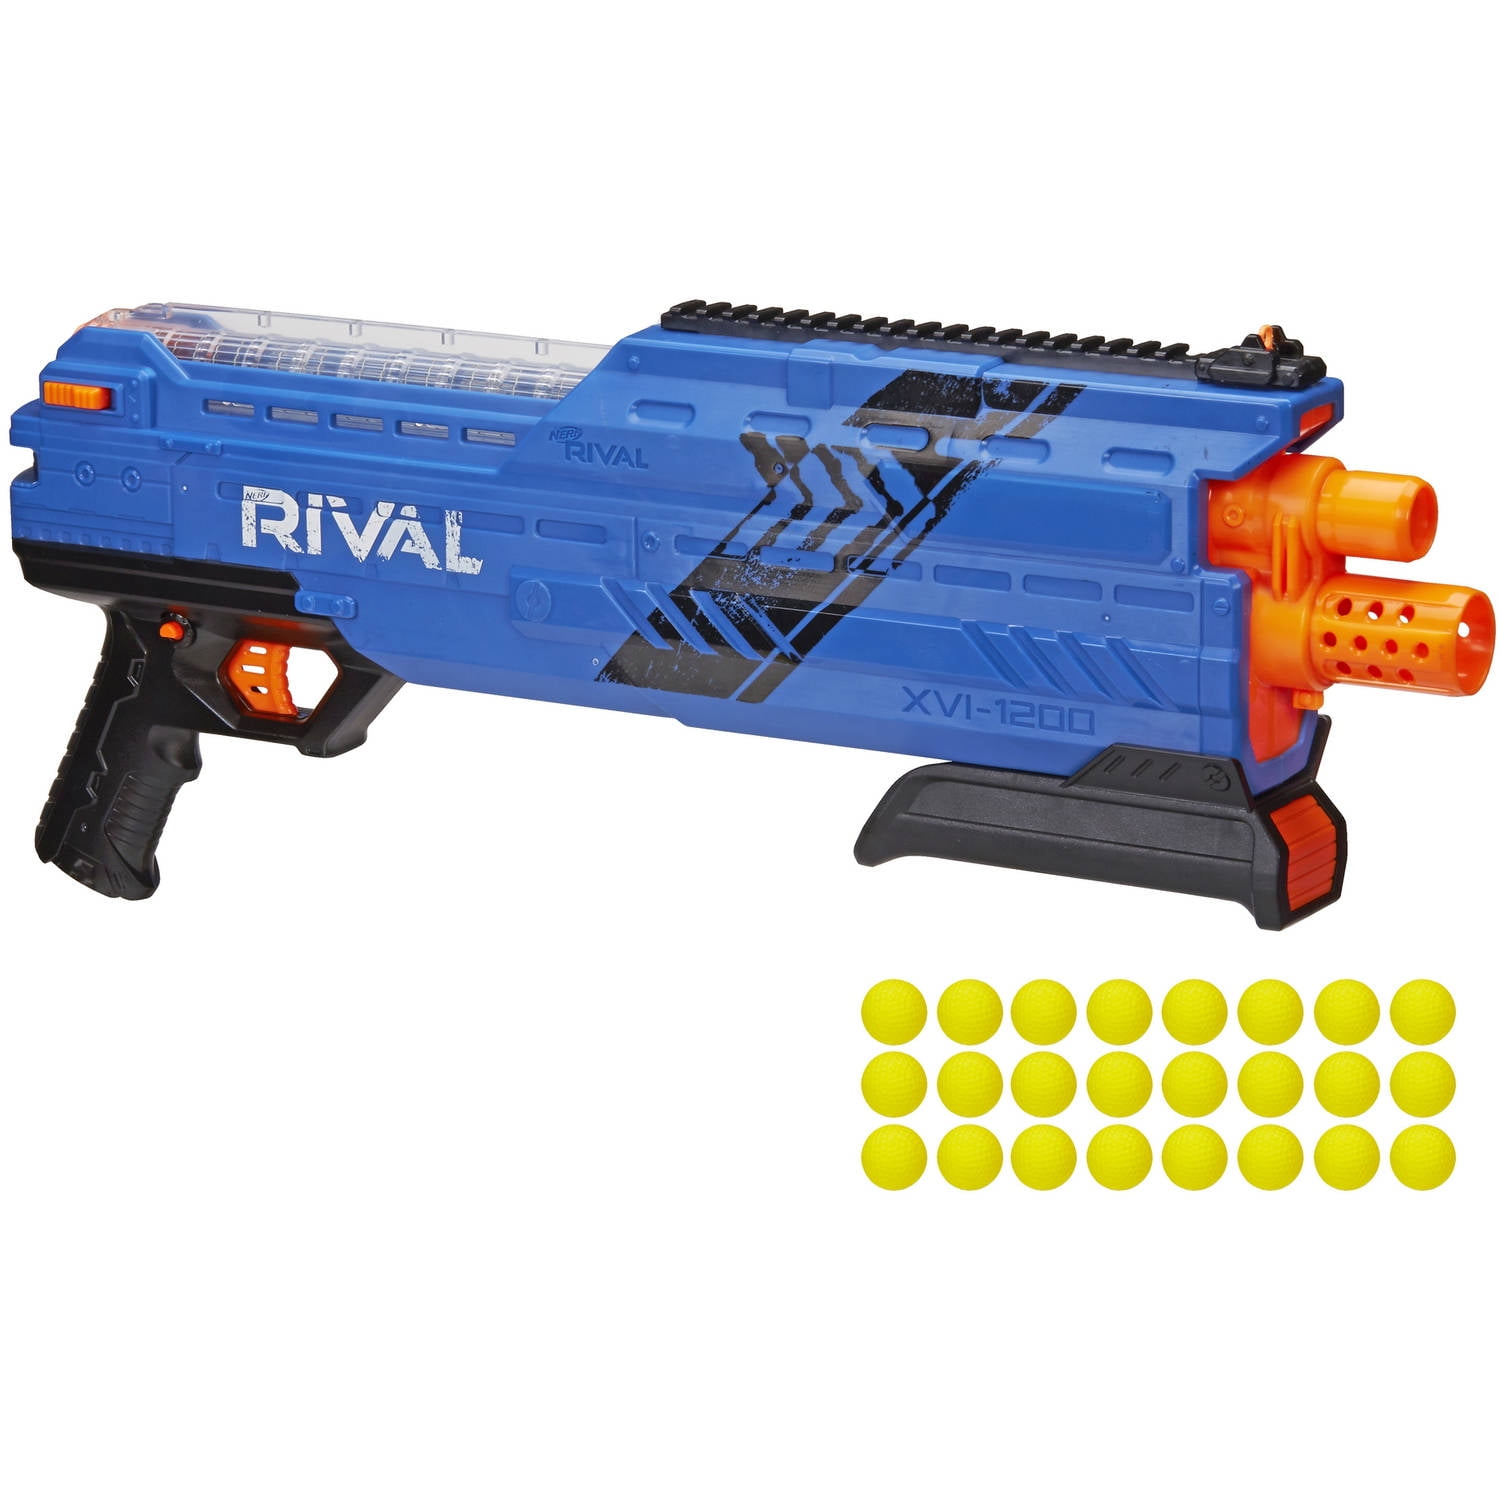 Nerf Rival Khaos Mxvi-4000 Blaster 40 High Impact Rounds Nerf Gun Blue Toy Play